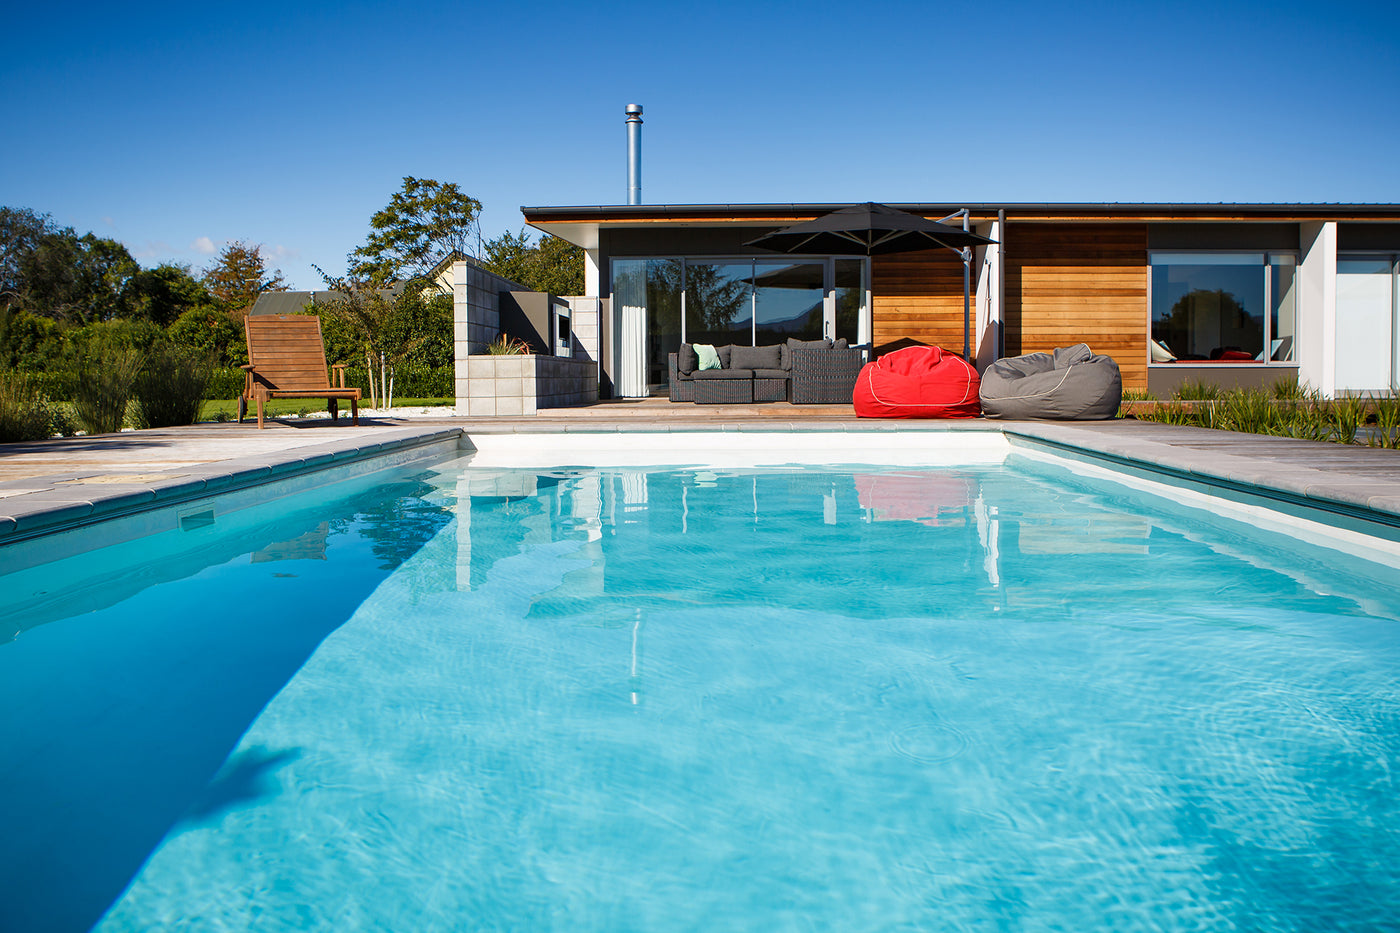 Pools by Aquanort Pools in Blenheim, Marlborough, NZ